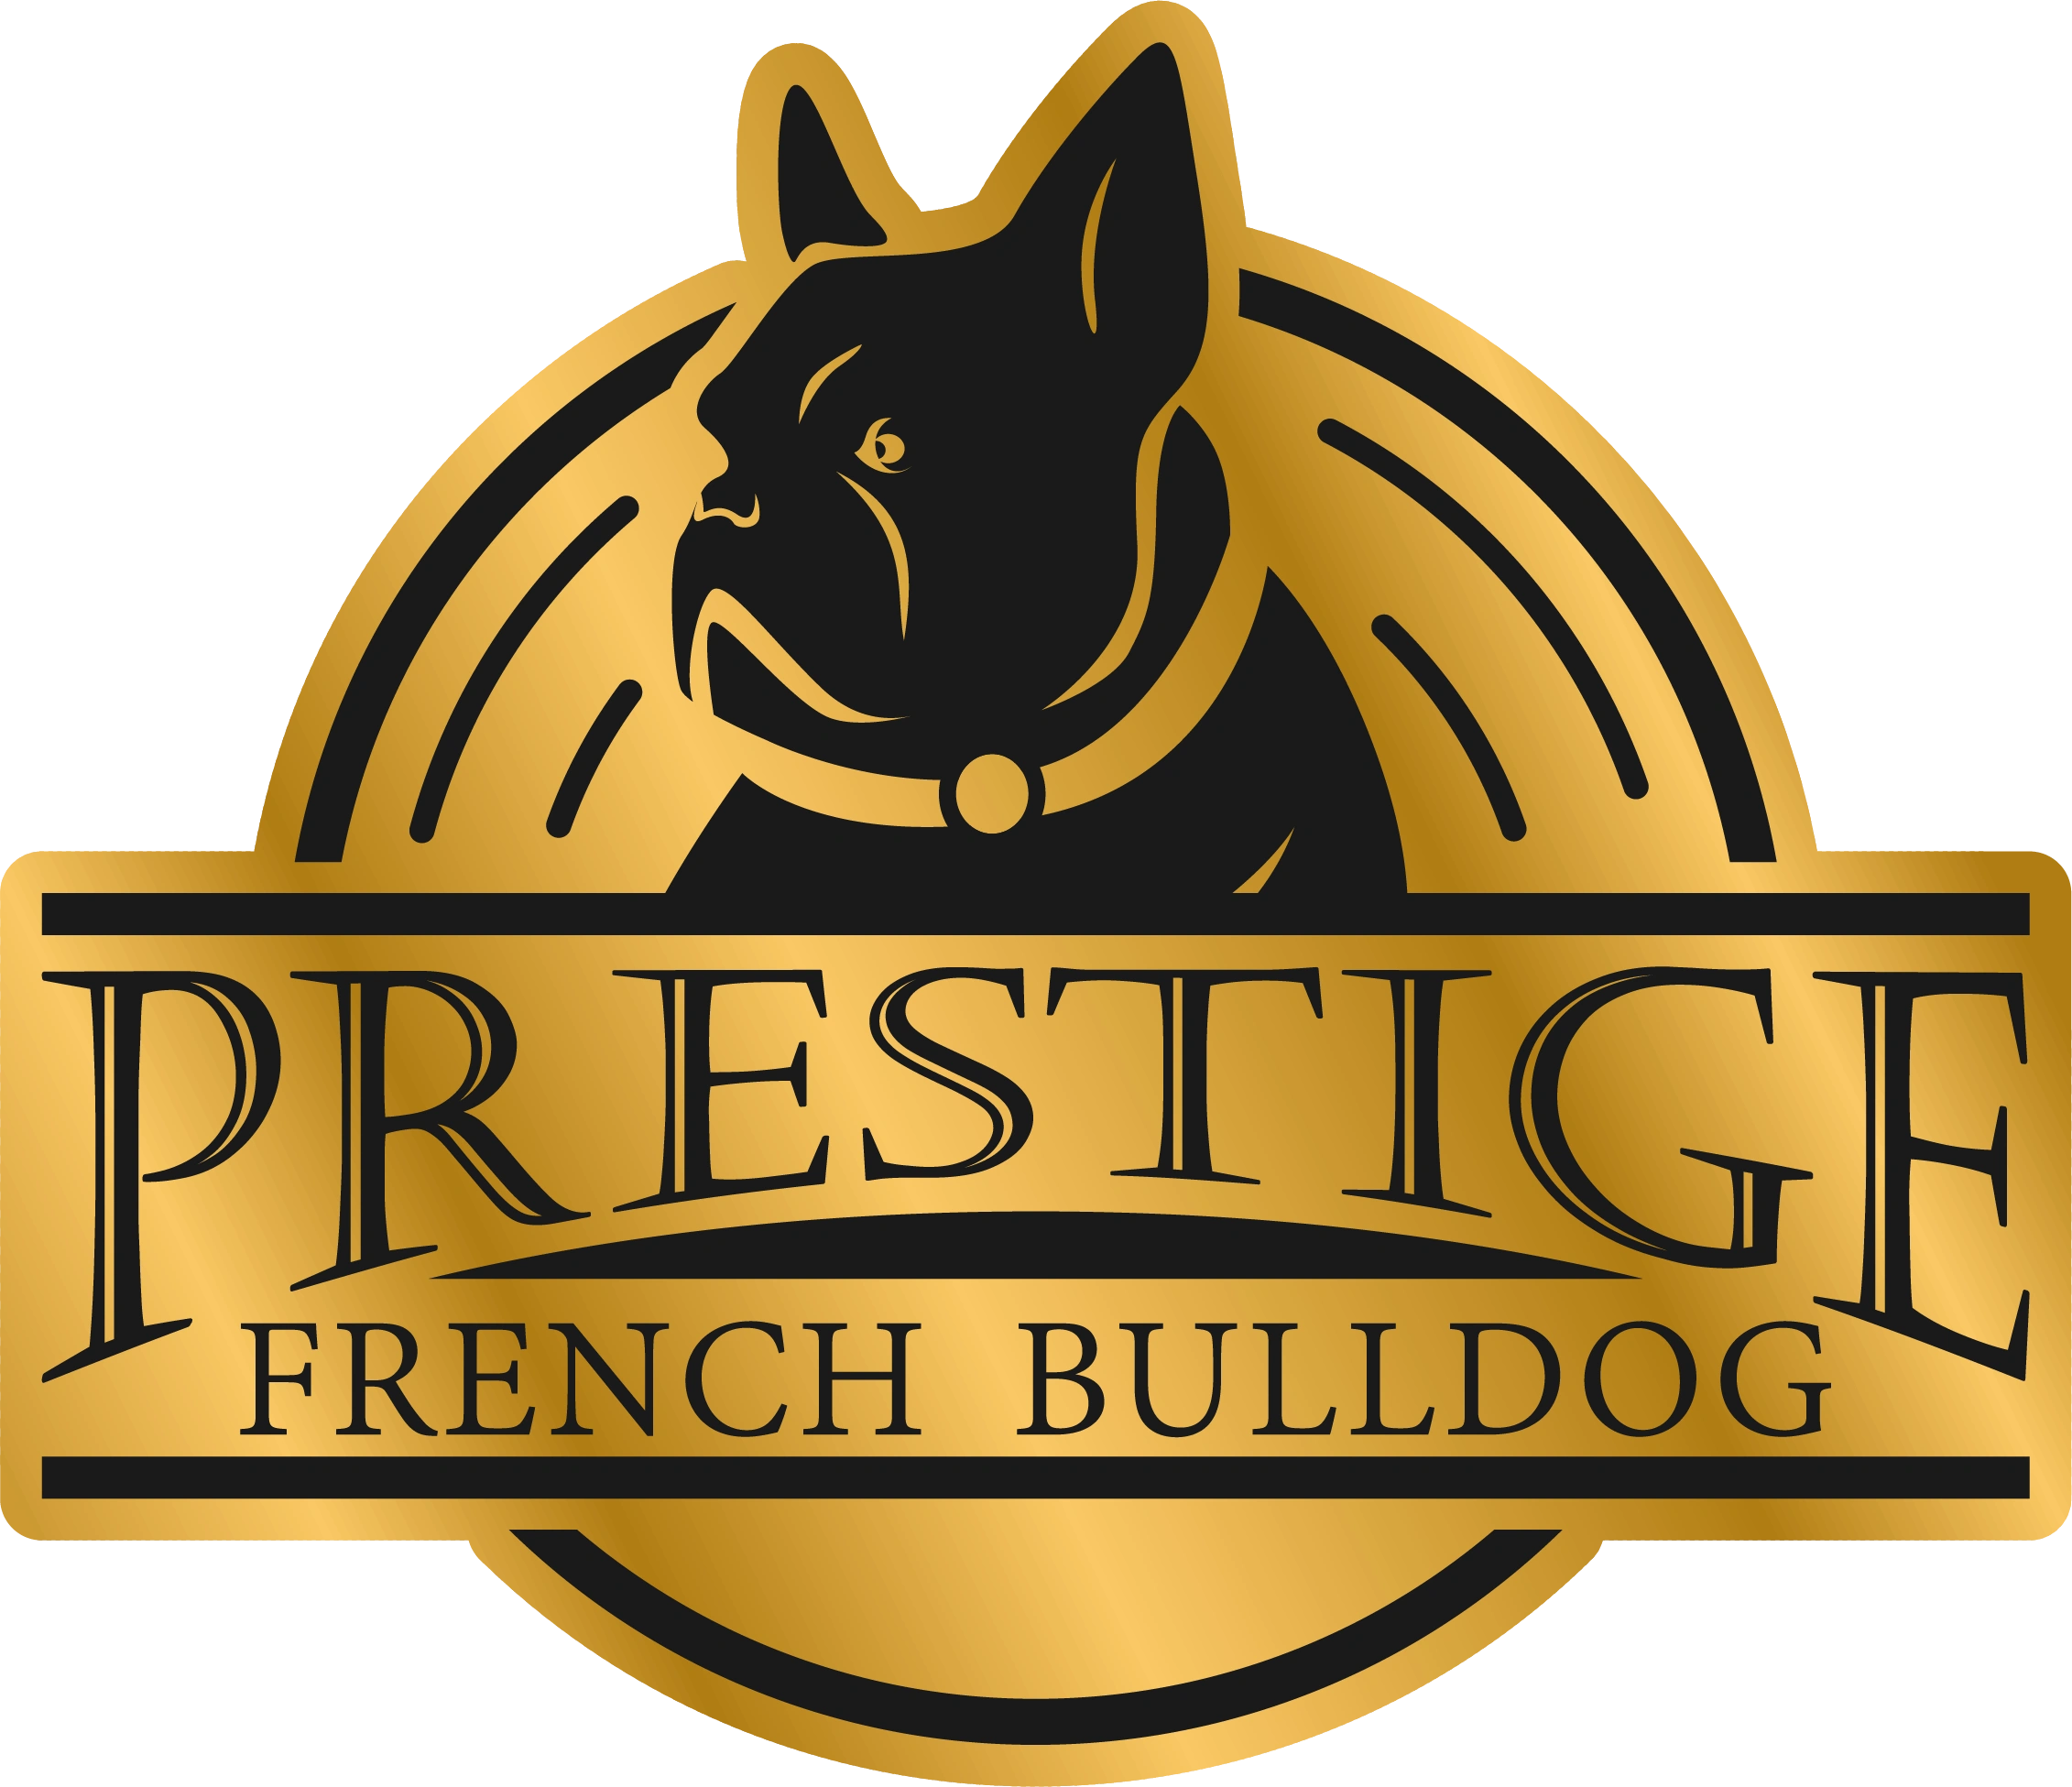 Prestige French Bulldog 